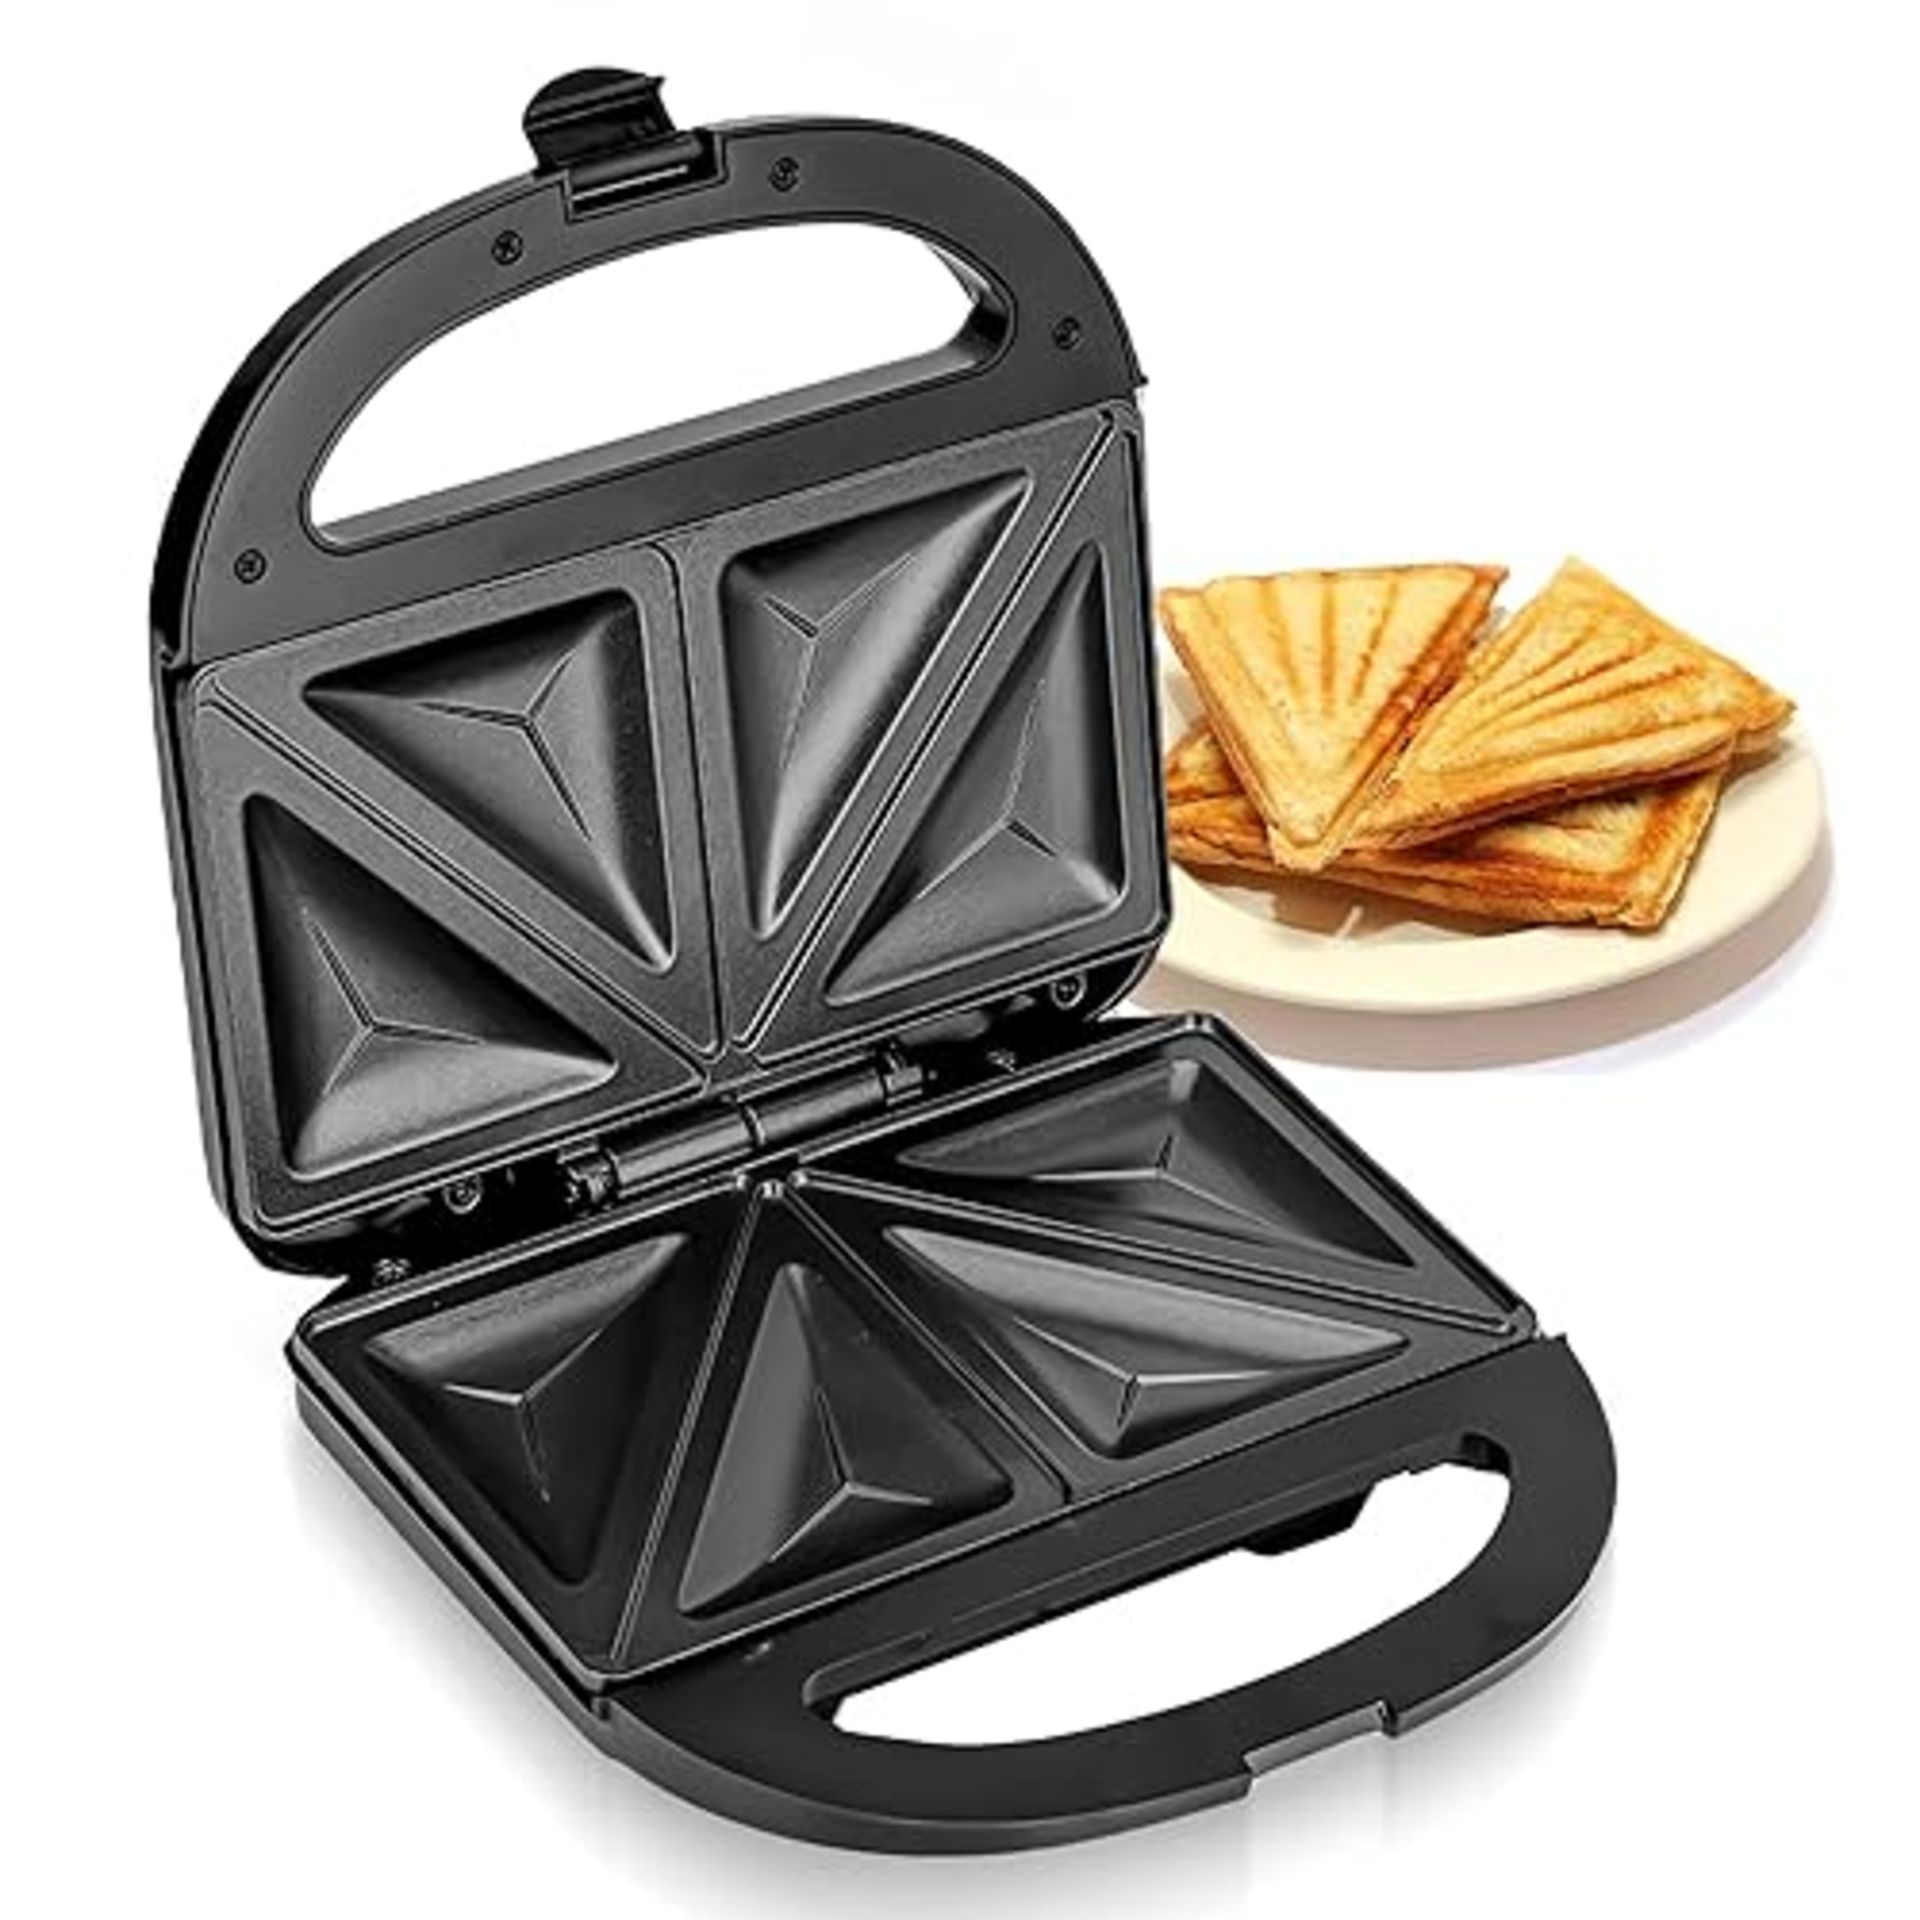 Geepas Toastie Maker | 2 Slice Sandwich Toaster, Cooks Delicious Crispy Sandwiches | 750W, 2 Slice 